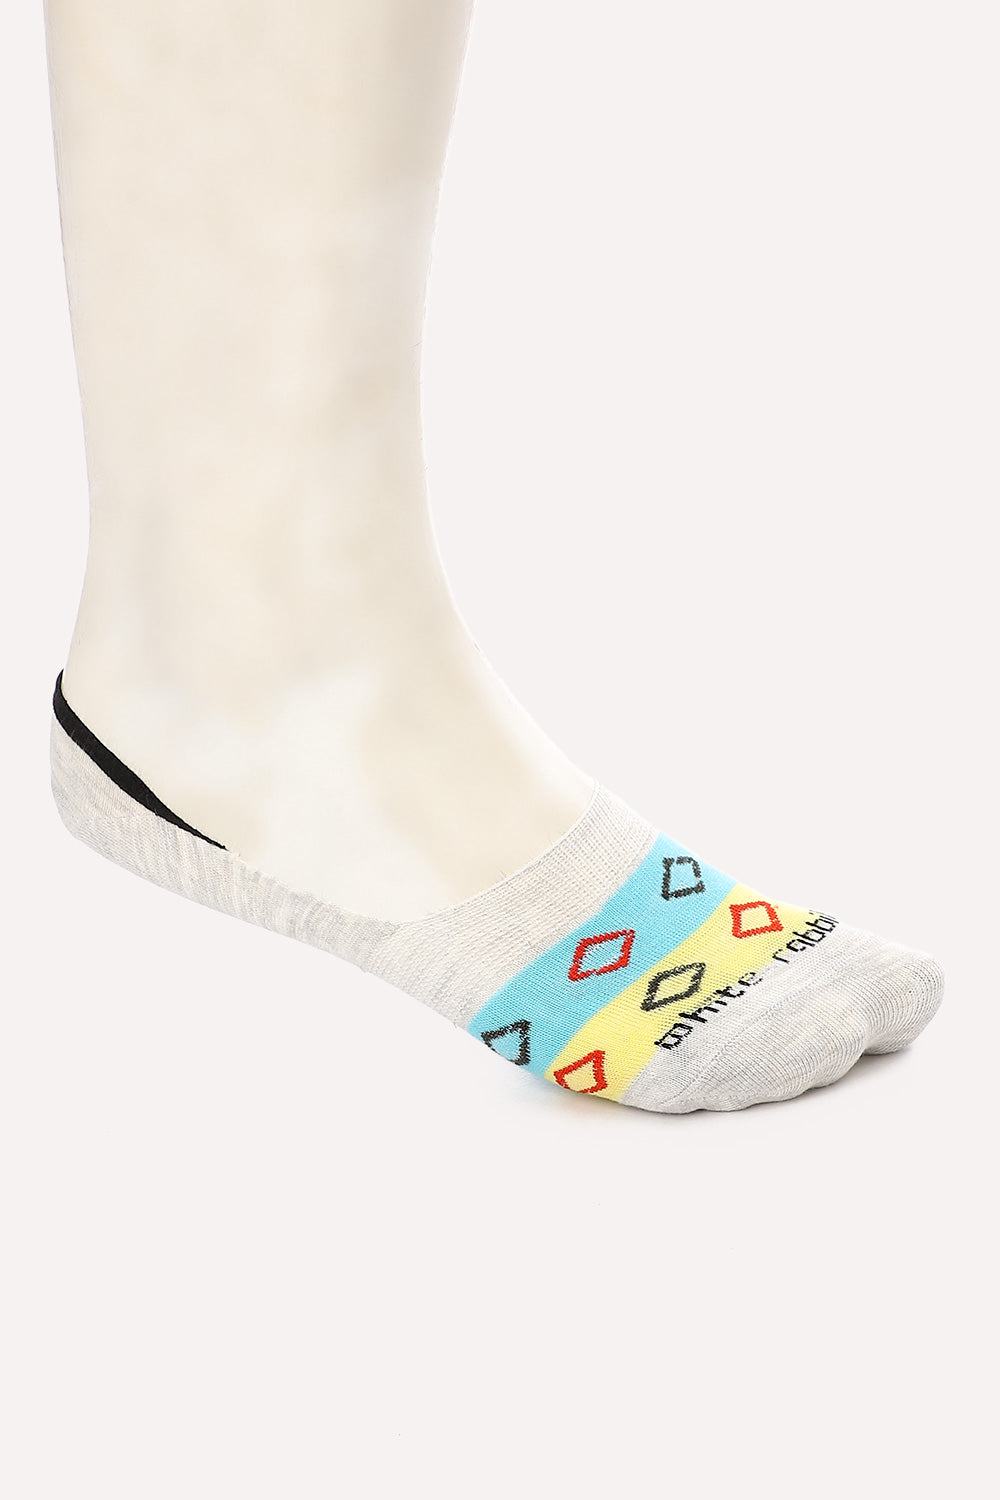 Patterned Slip On Invisible Socks